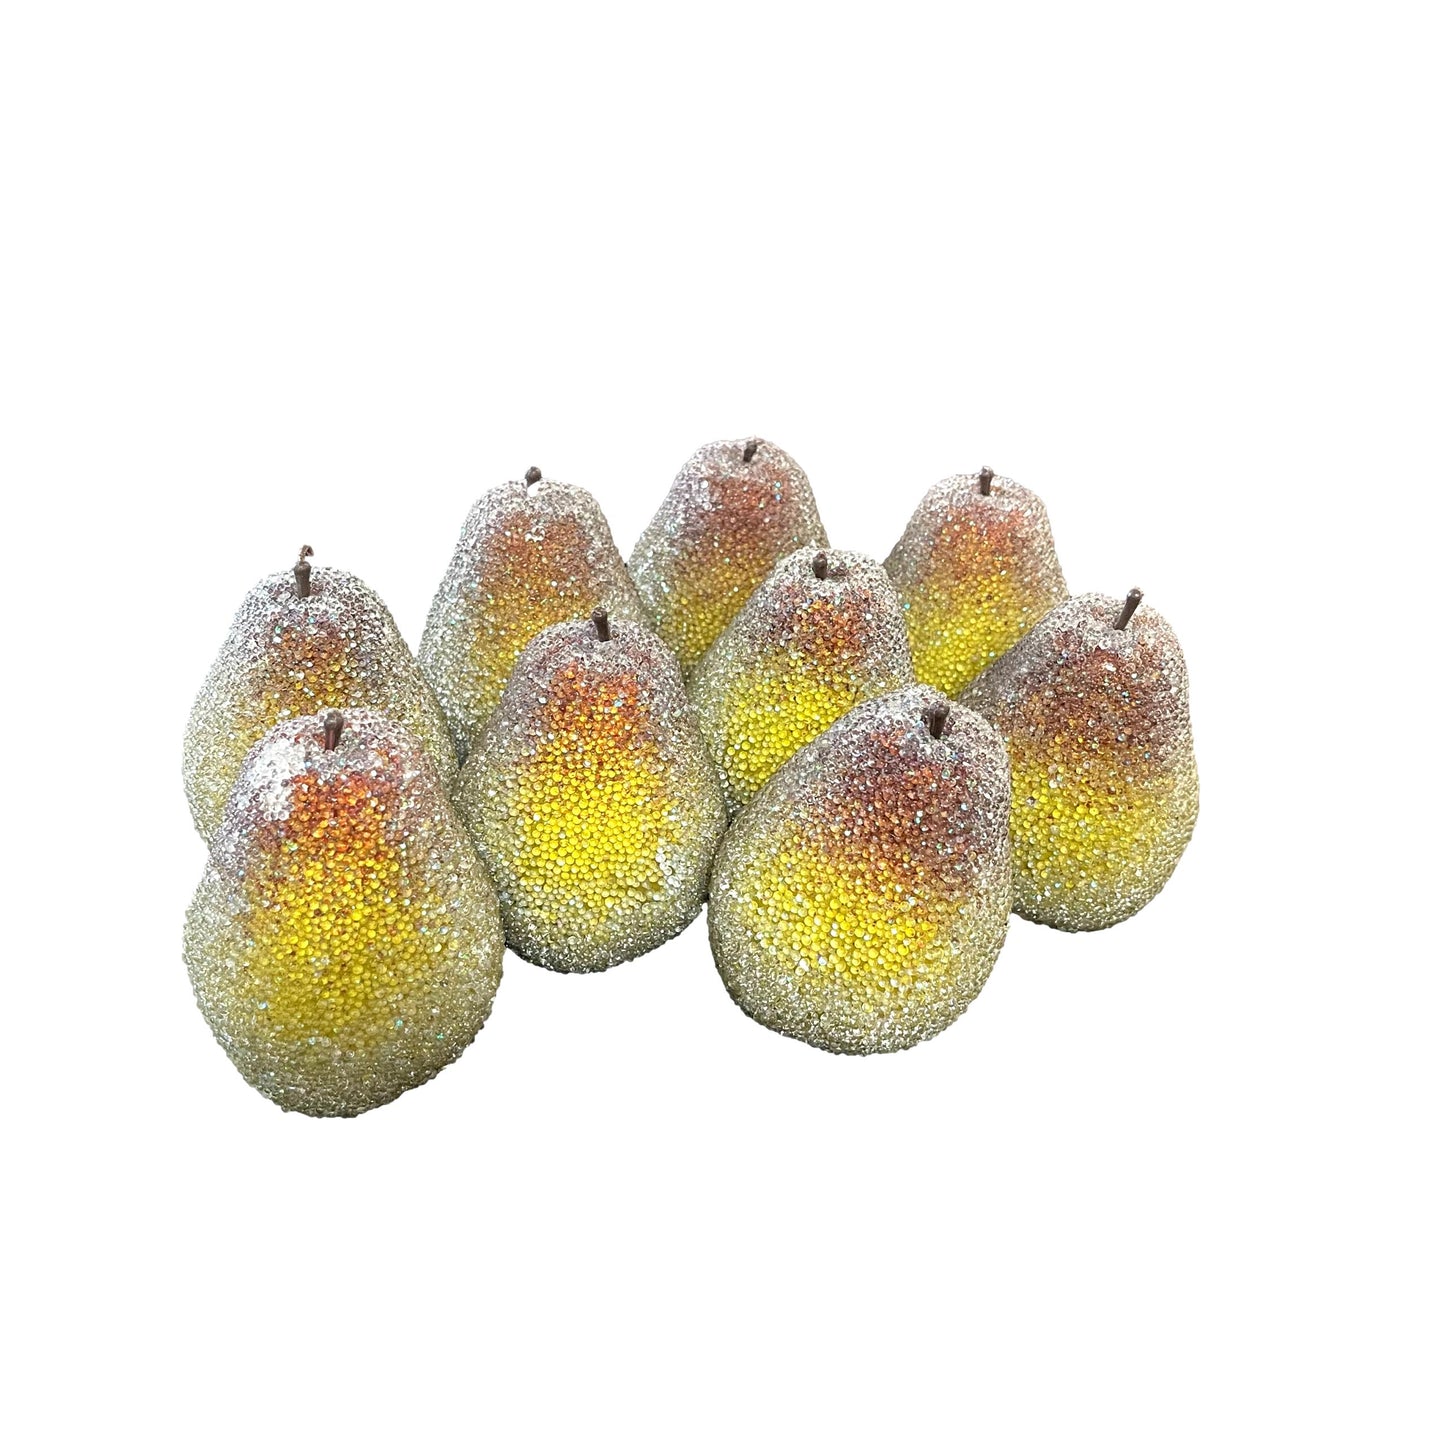 Set of Decorative Pears